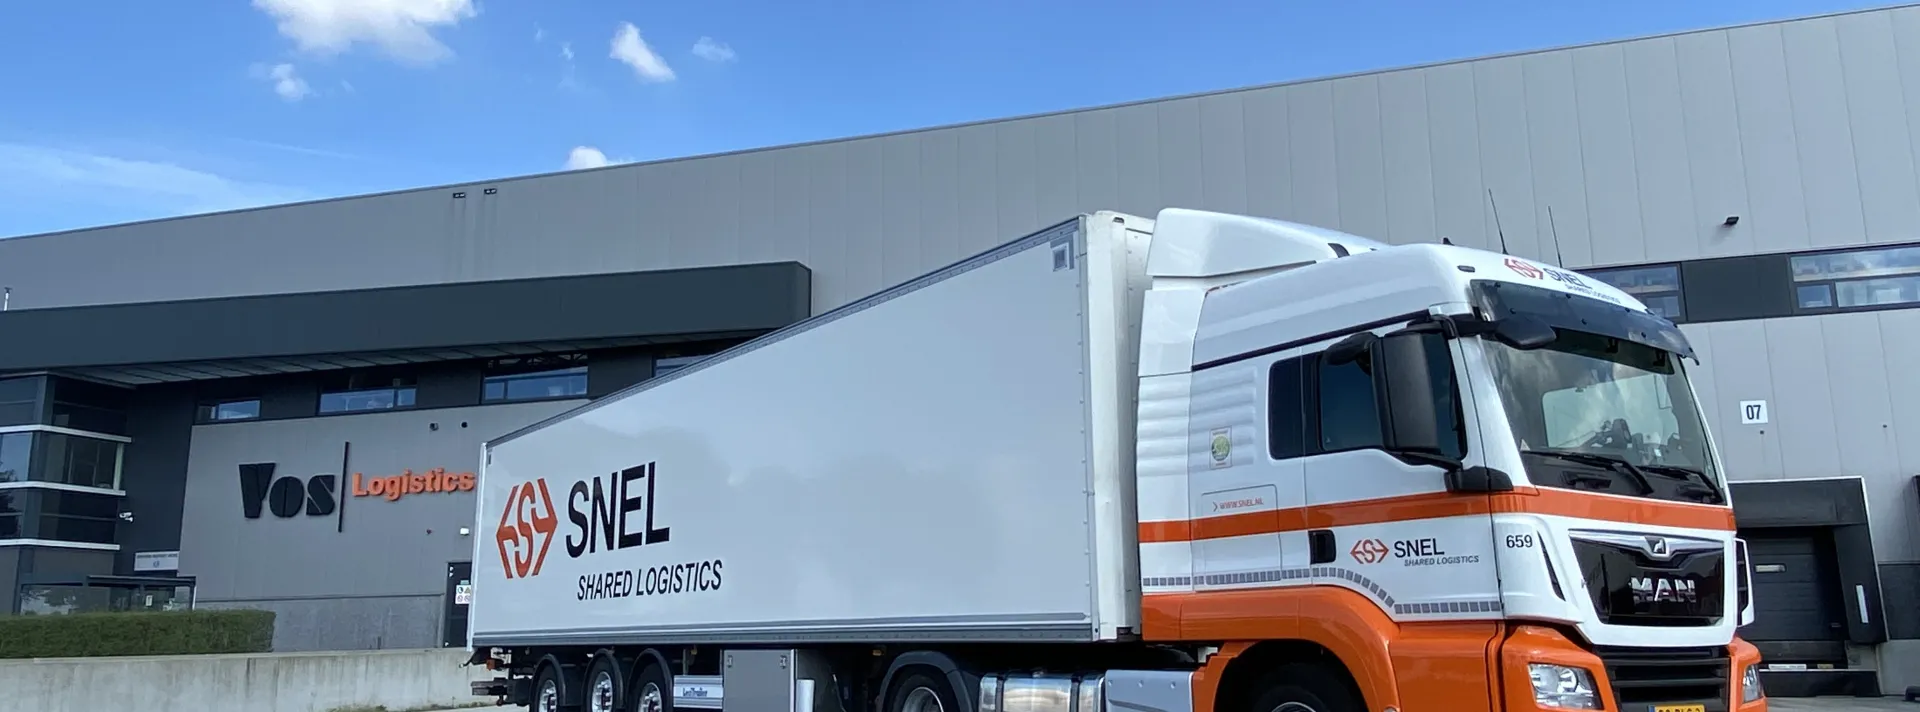 VOS Logistics camion